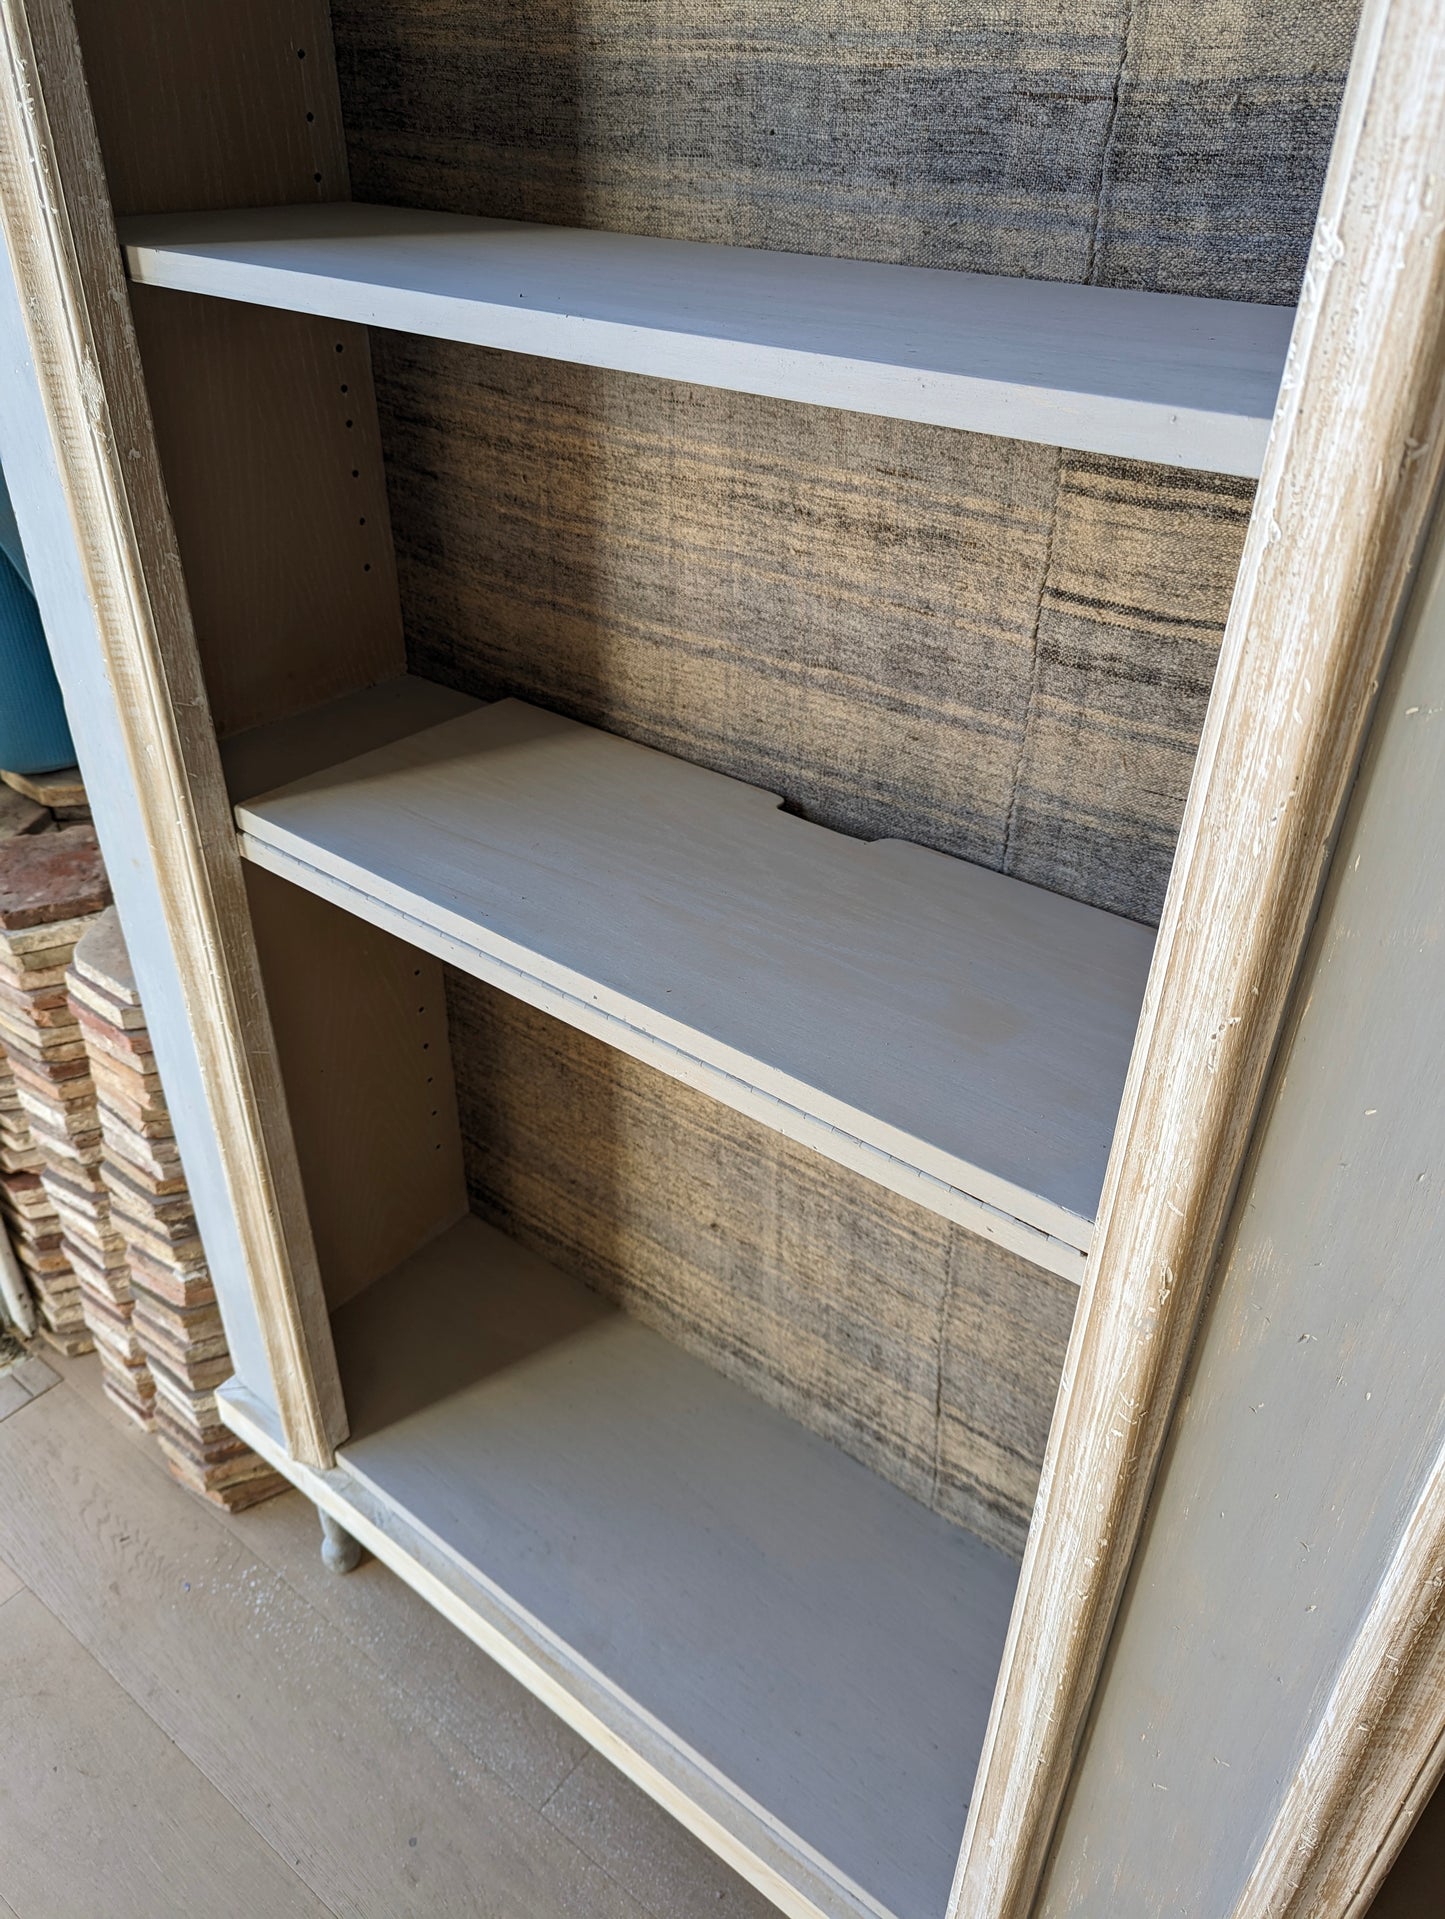 Bookshelf blue/grey and white patina cabinet on six legs